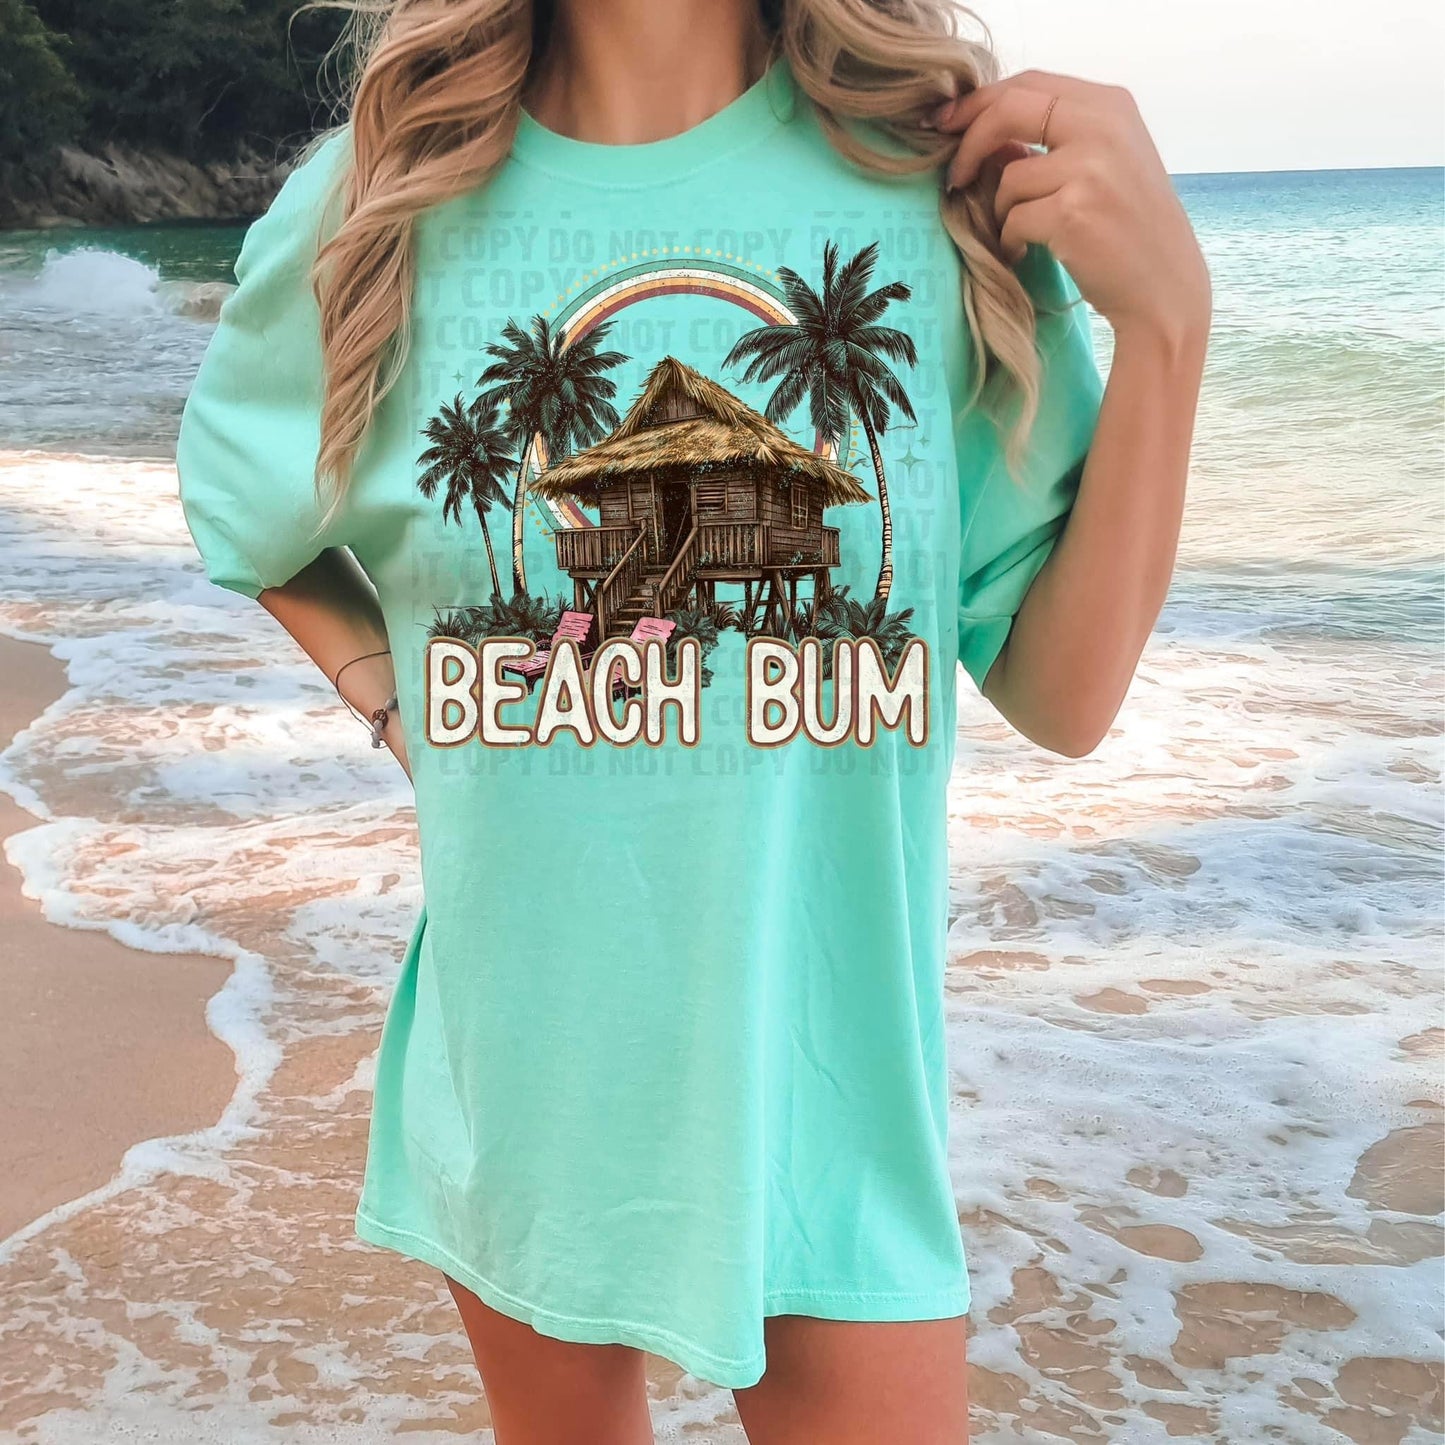 Beach bum screen print transfer